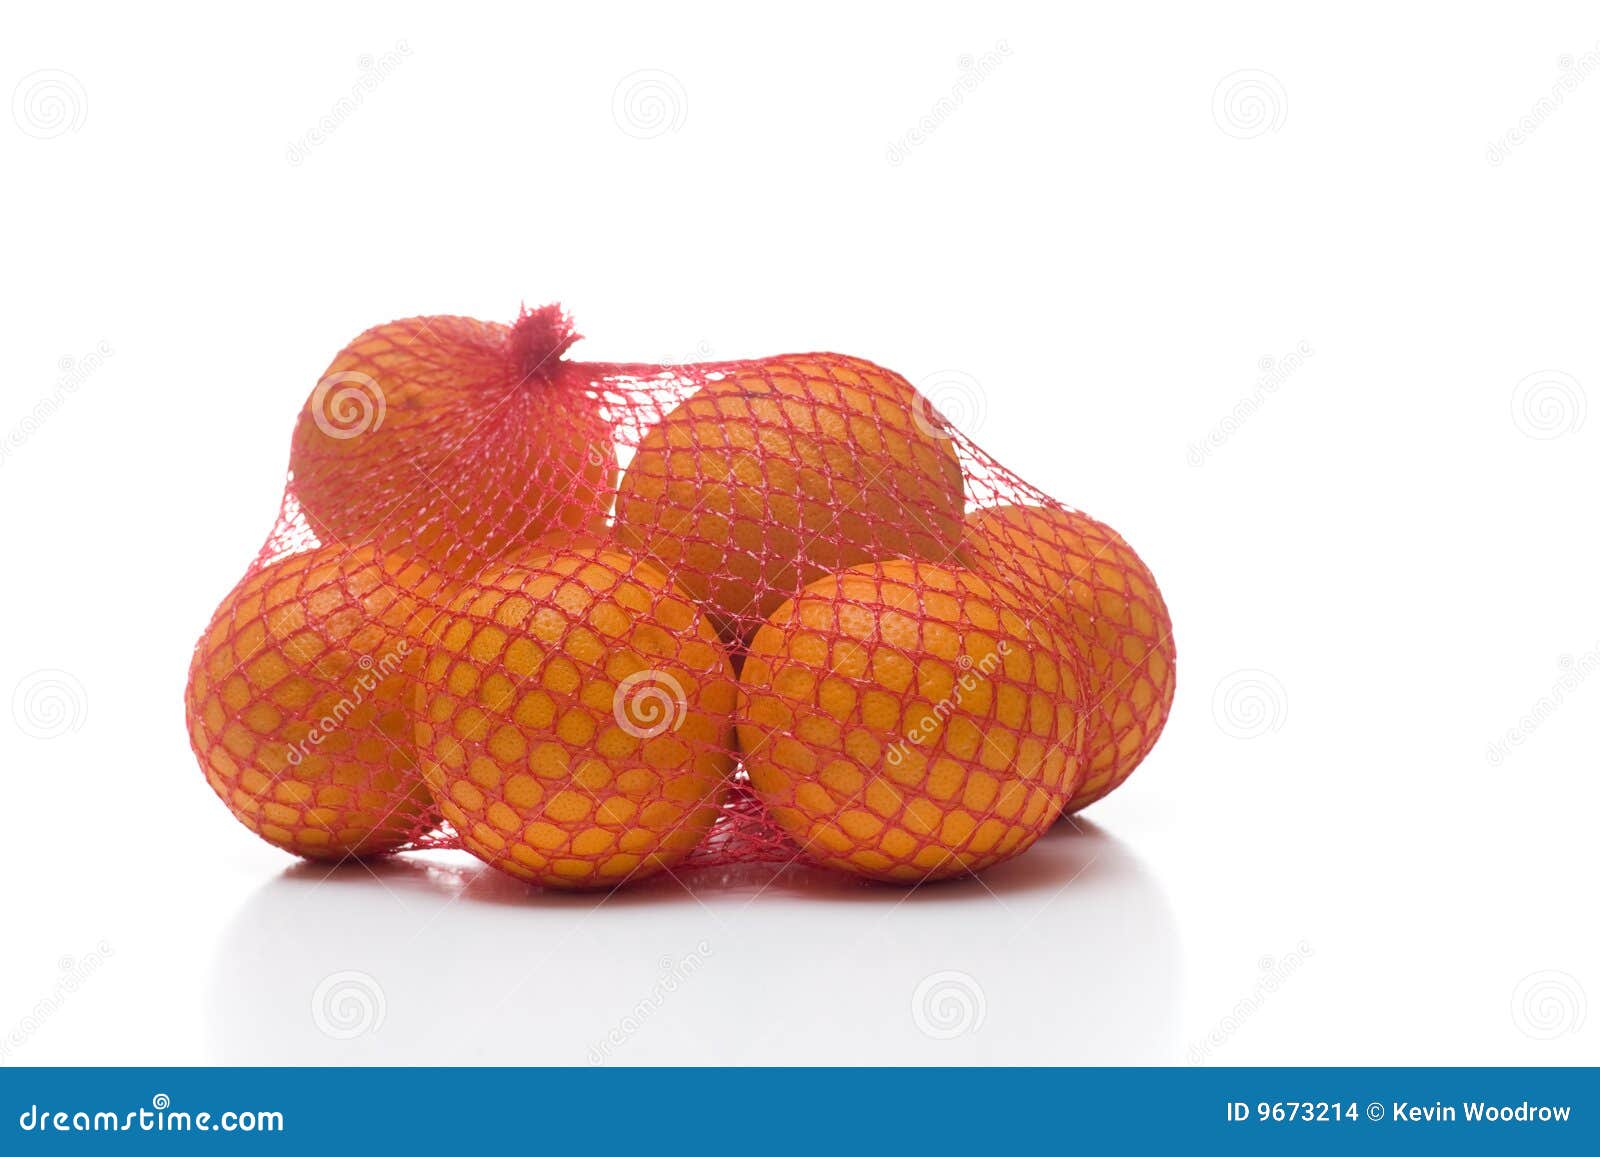 oranges in netting